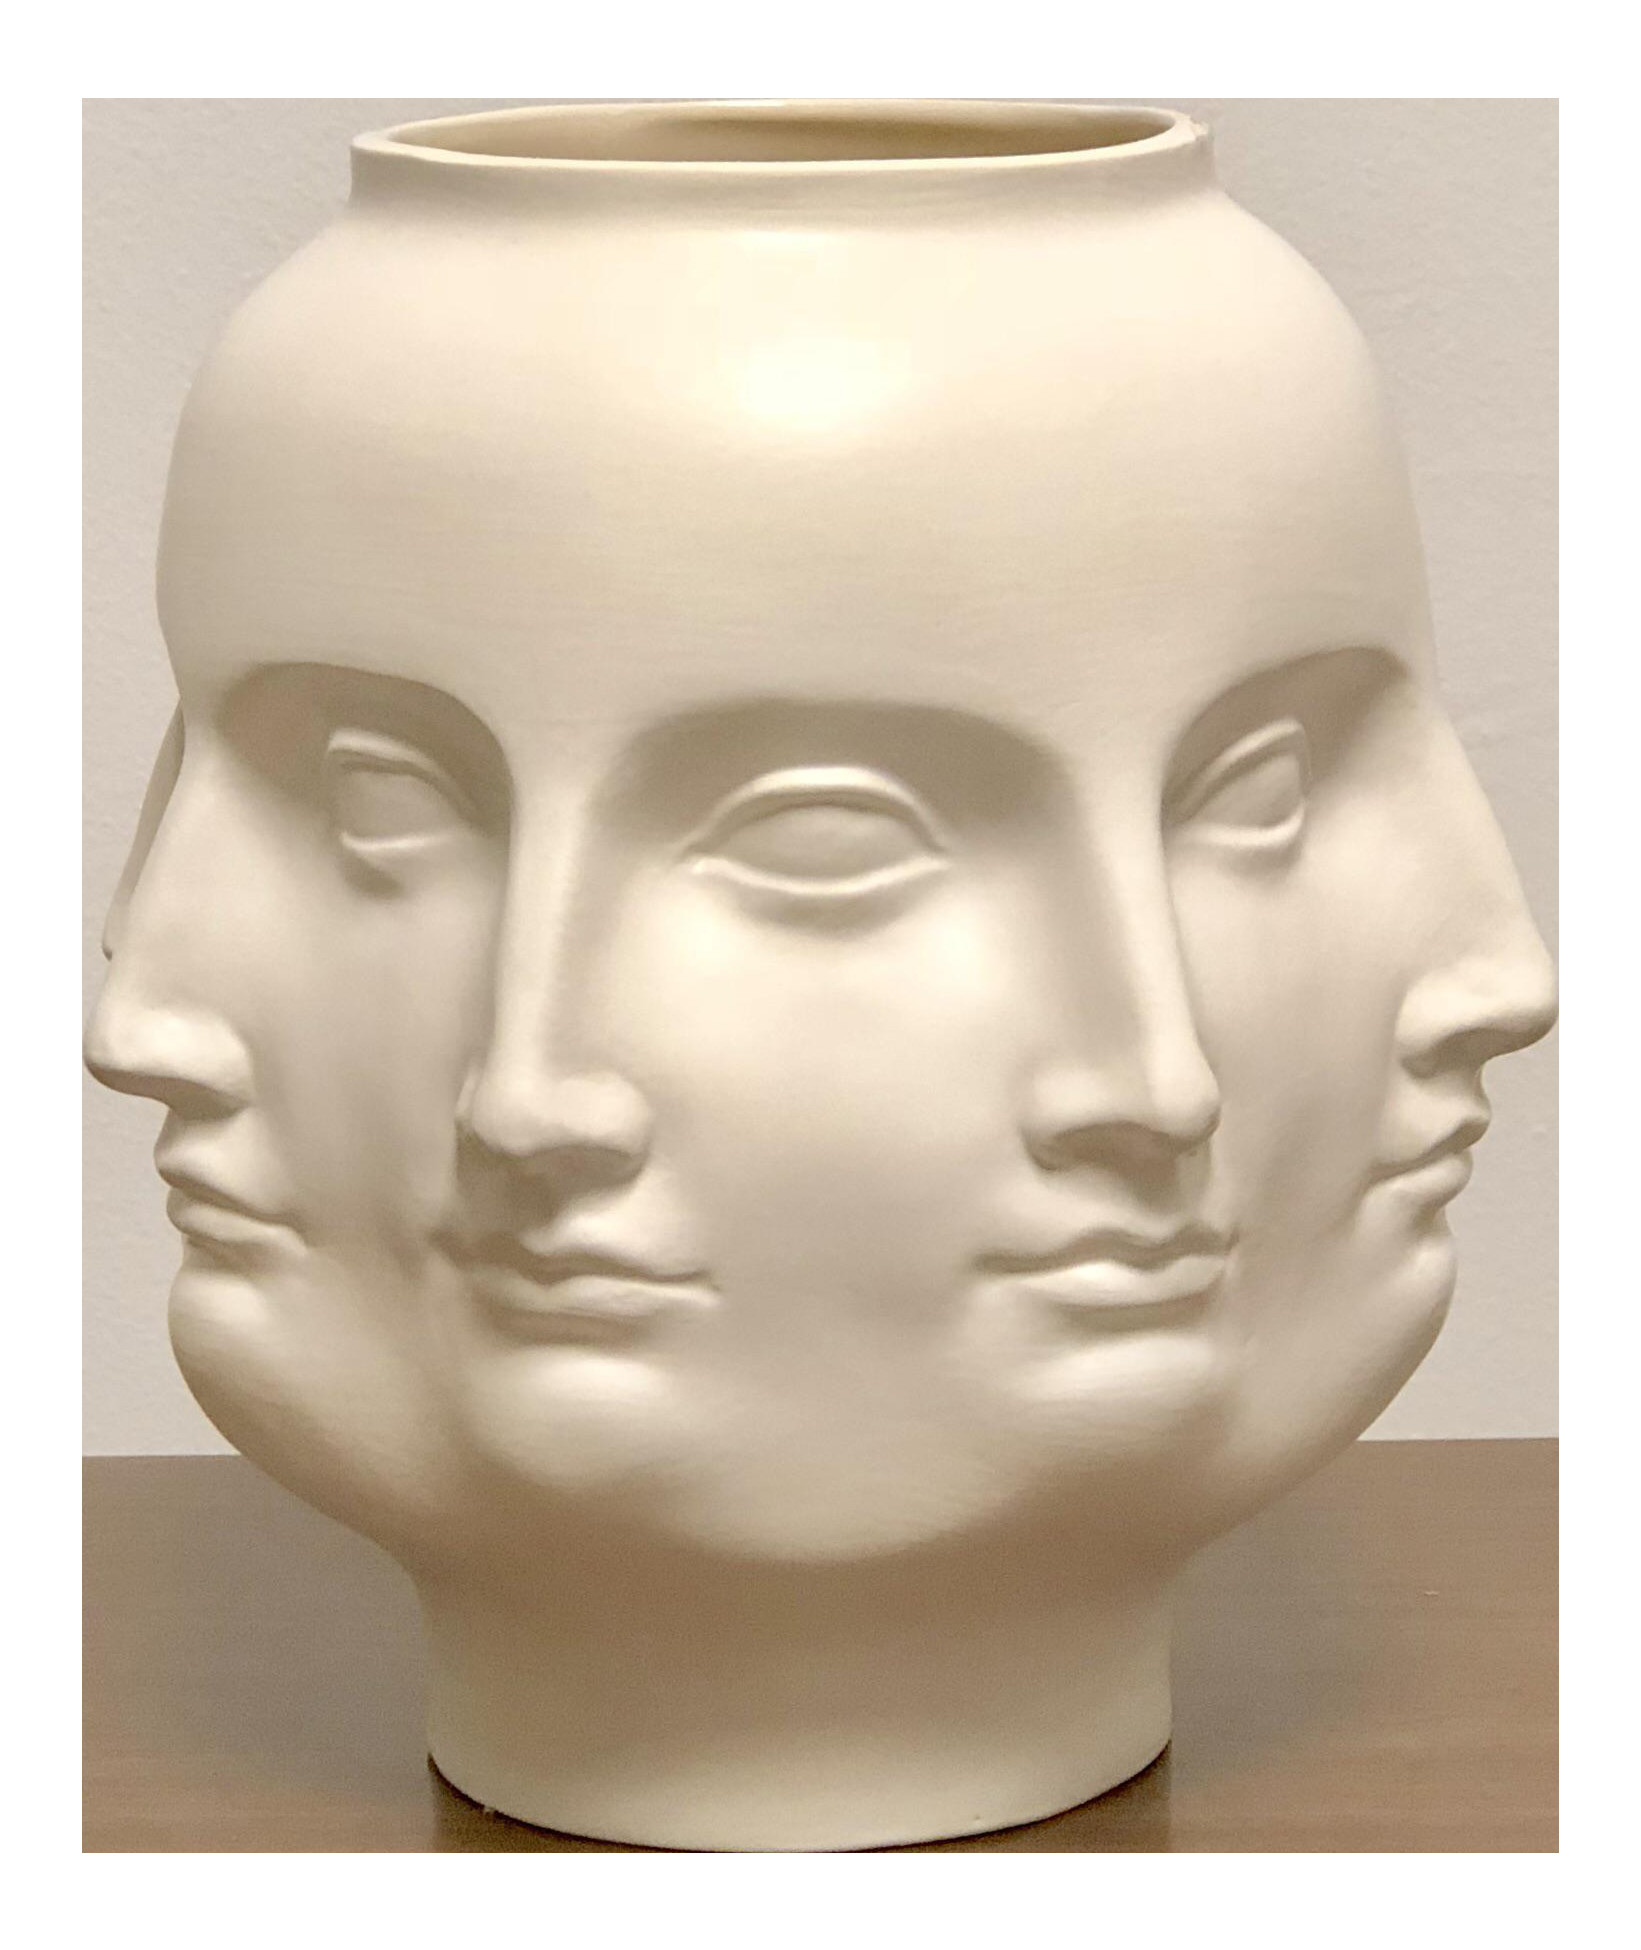 19 Unique Jonathan Adler Dora Maar Vase 2024 free download jonathan adler dora maar vase of perpetual face dora maar style white ceramic urn chairish inside perpetual face dora maar style white ceramic urn 2303